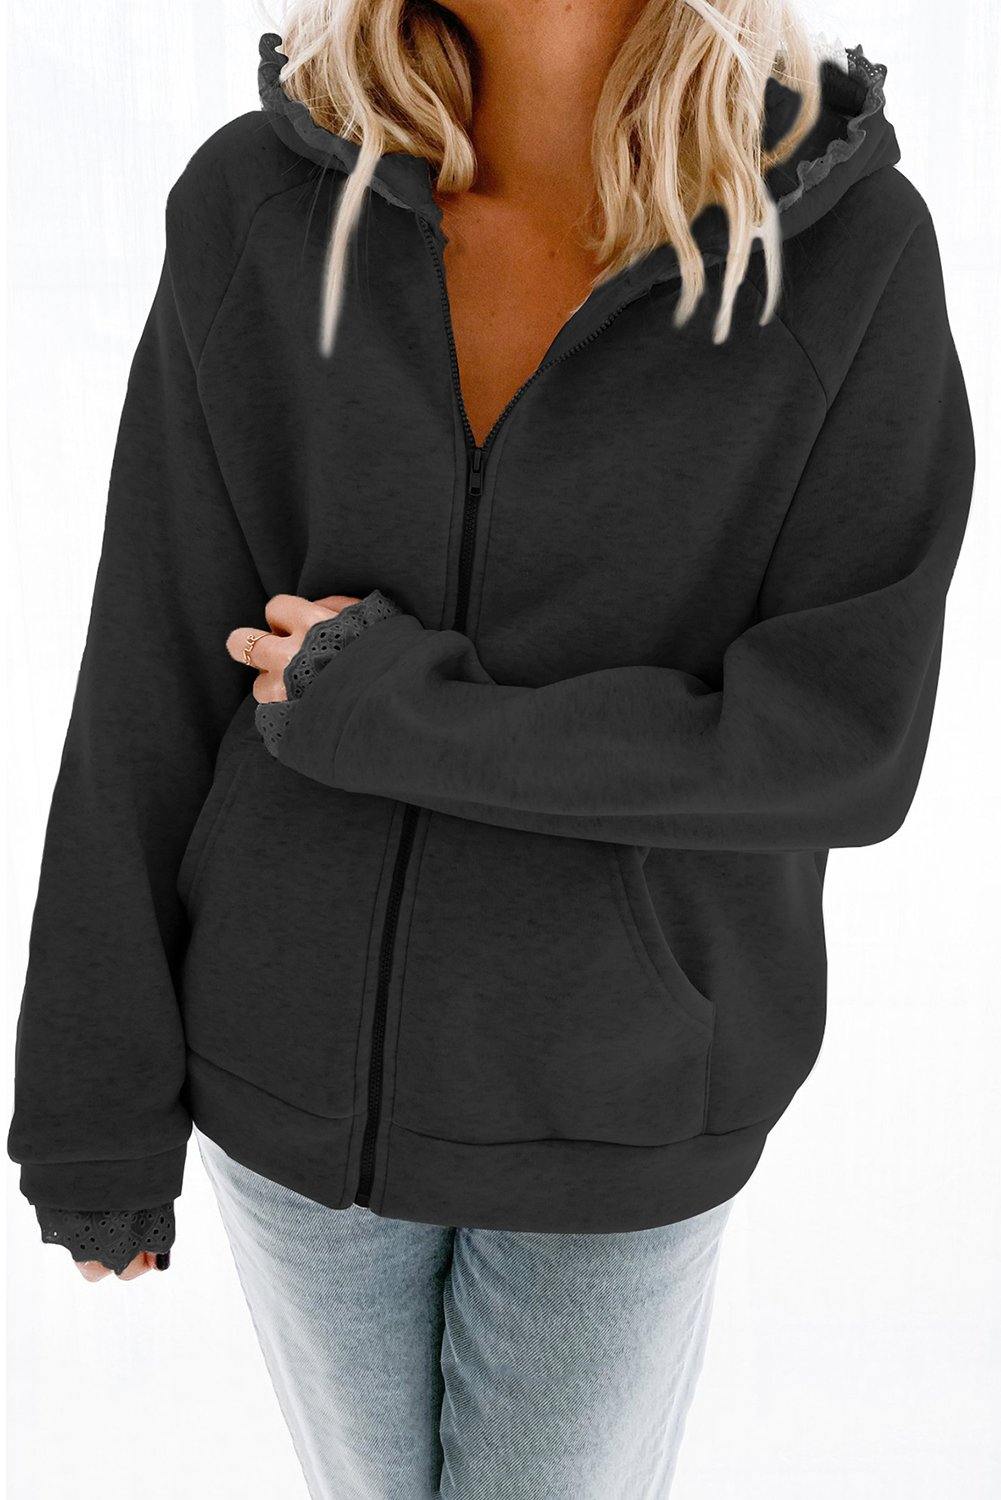 Zip-up Lace Trim Hooded Coat - L & M Kee, LLC